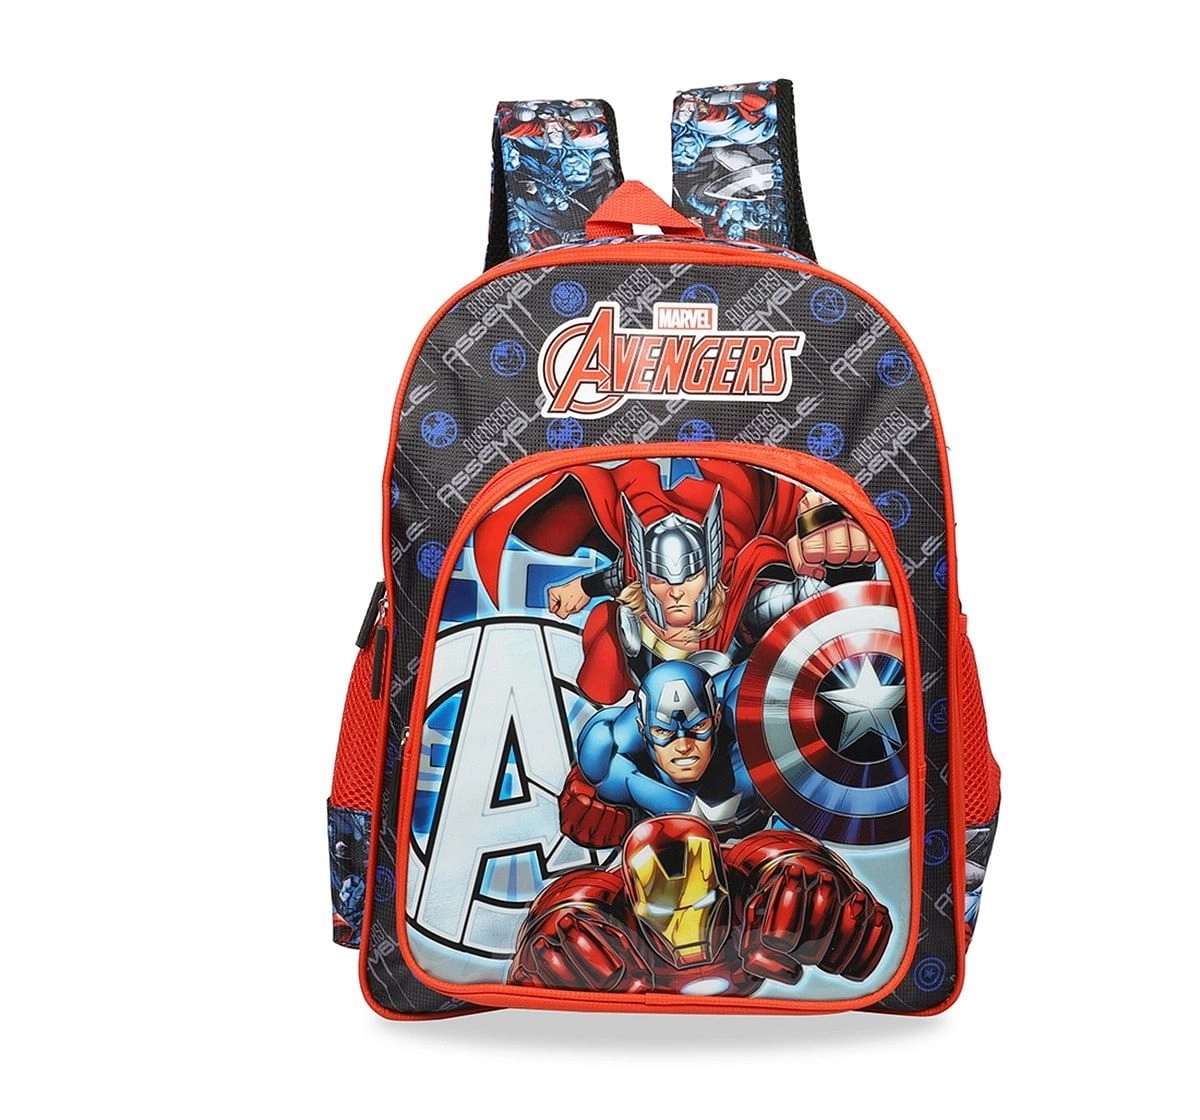 Marvel Avengers Assemble School Bag 36 Cm Bags for age 3Y+ 